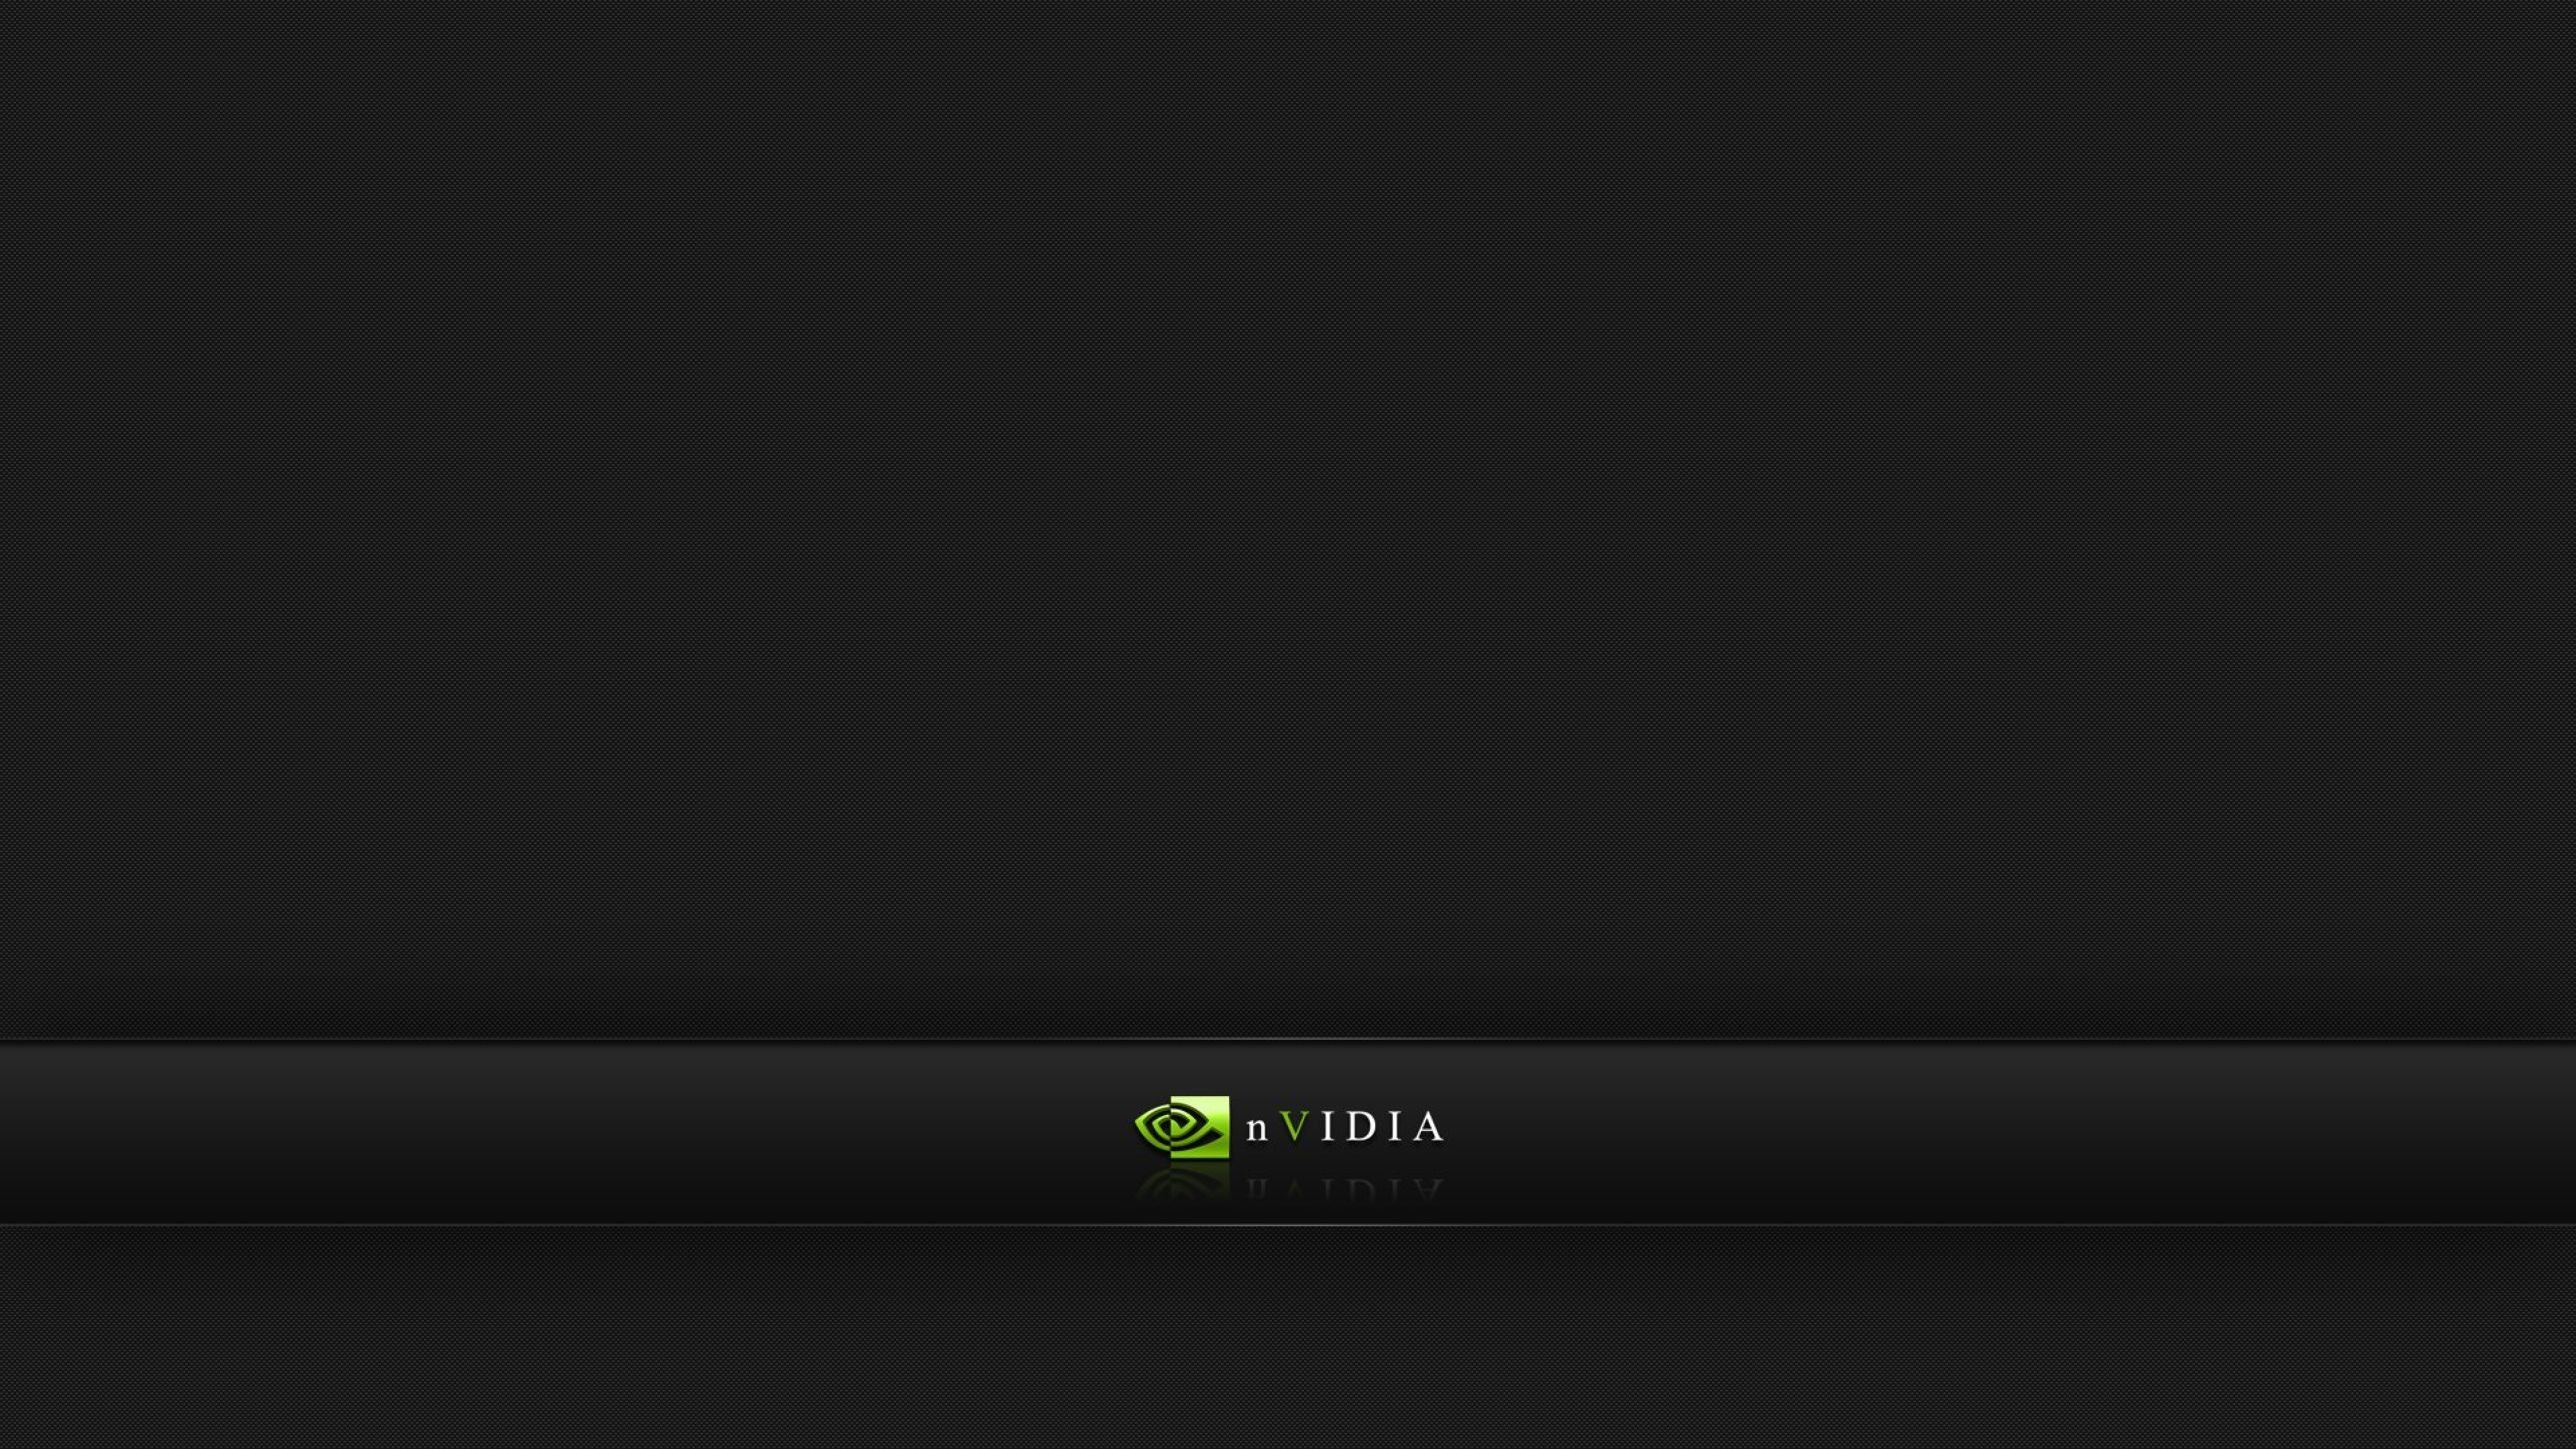 Nvidia Firm Green Black Logo Wallpaper Background 4k Ultra HD